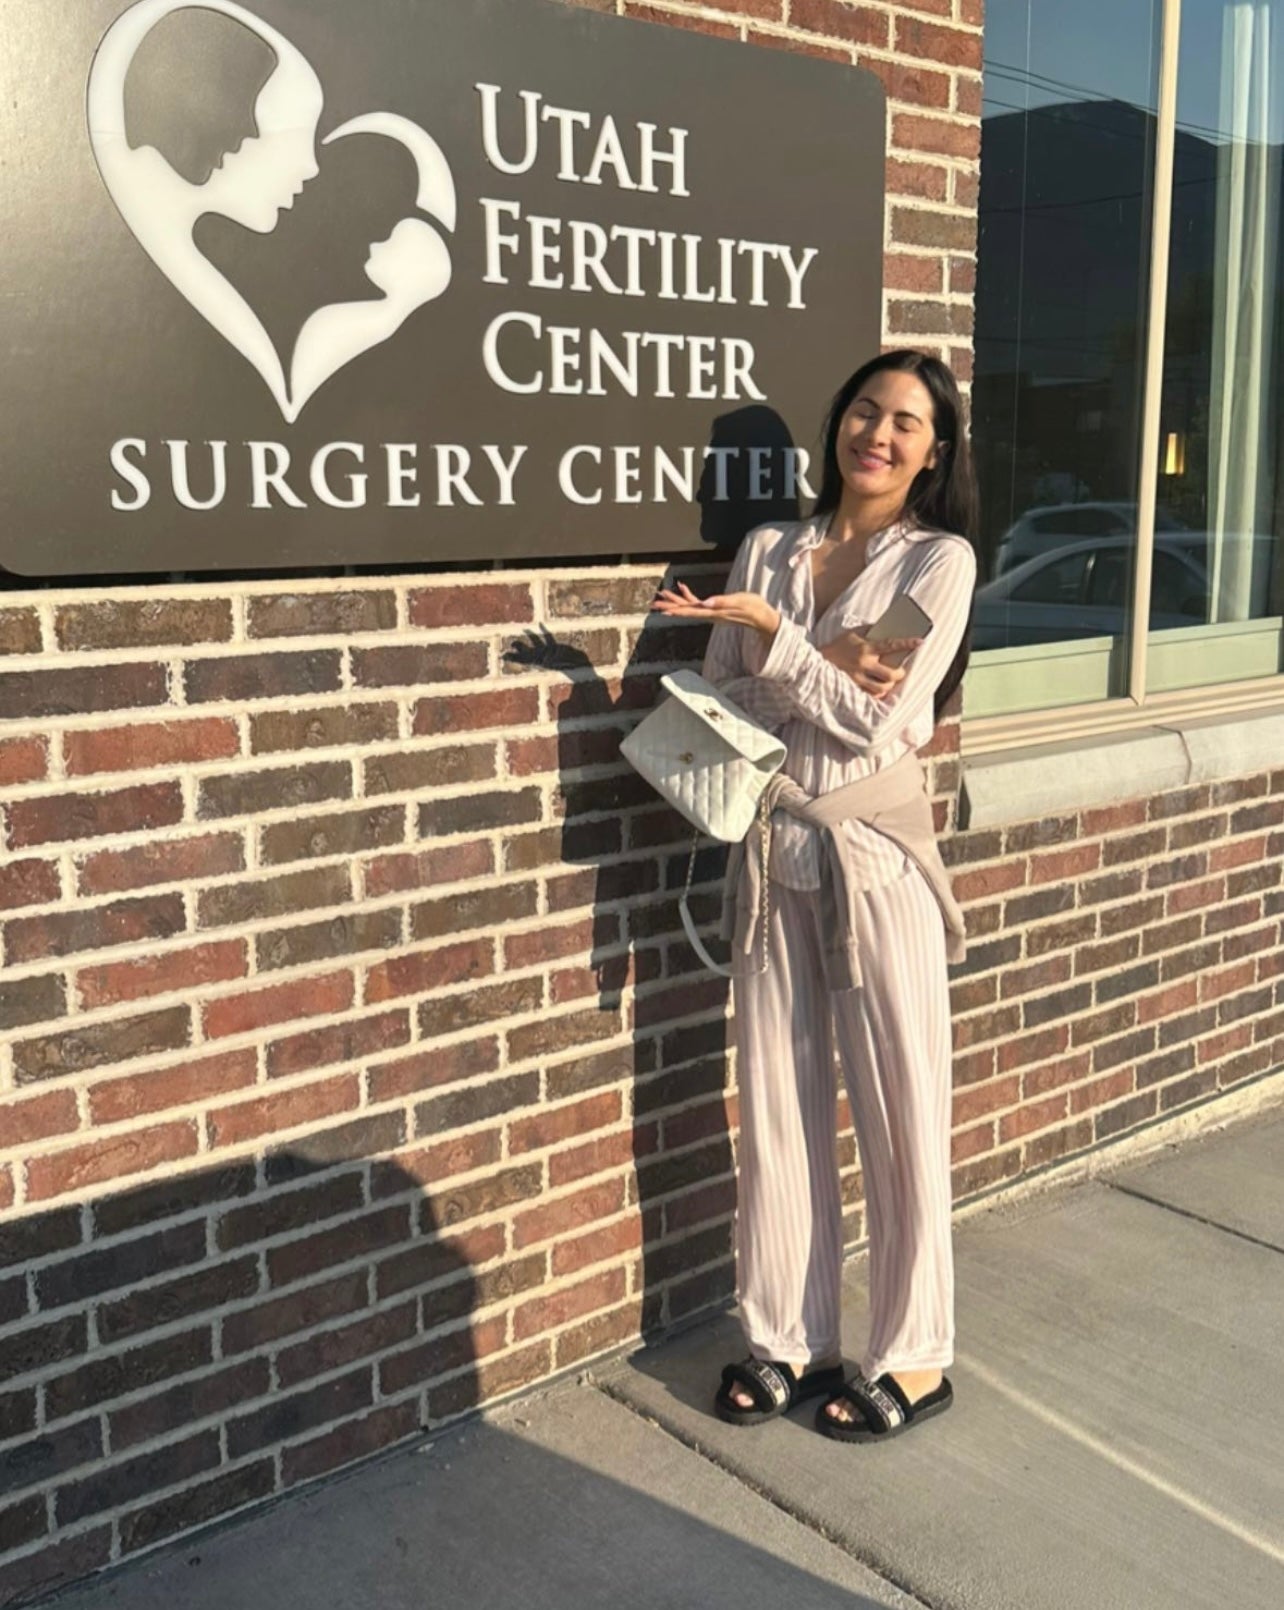 My IVF Journey (So Far)